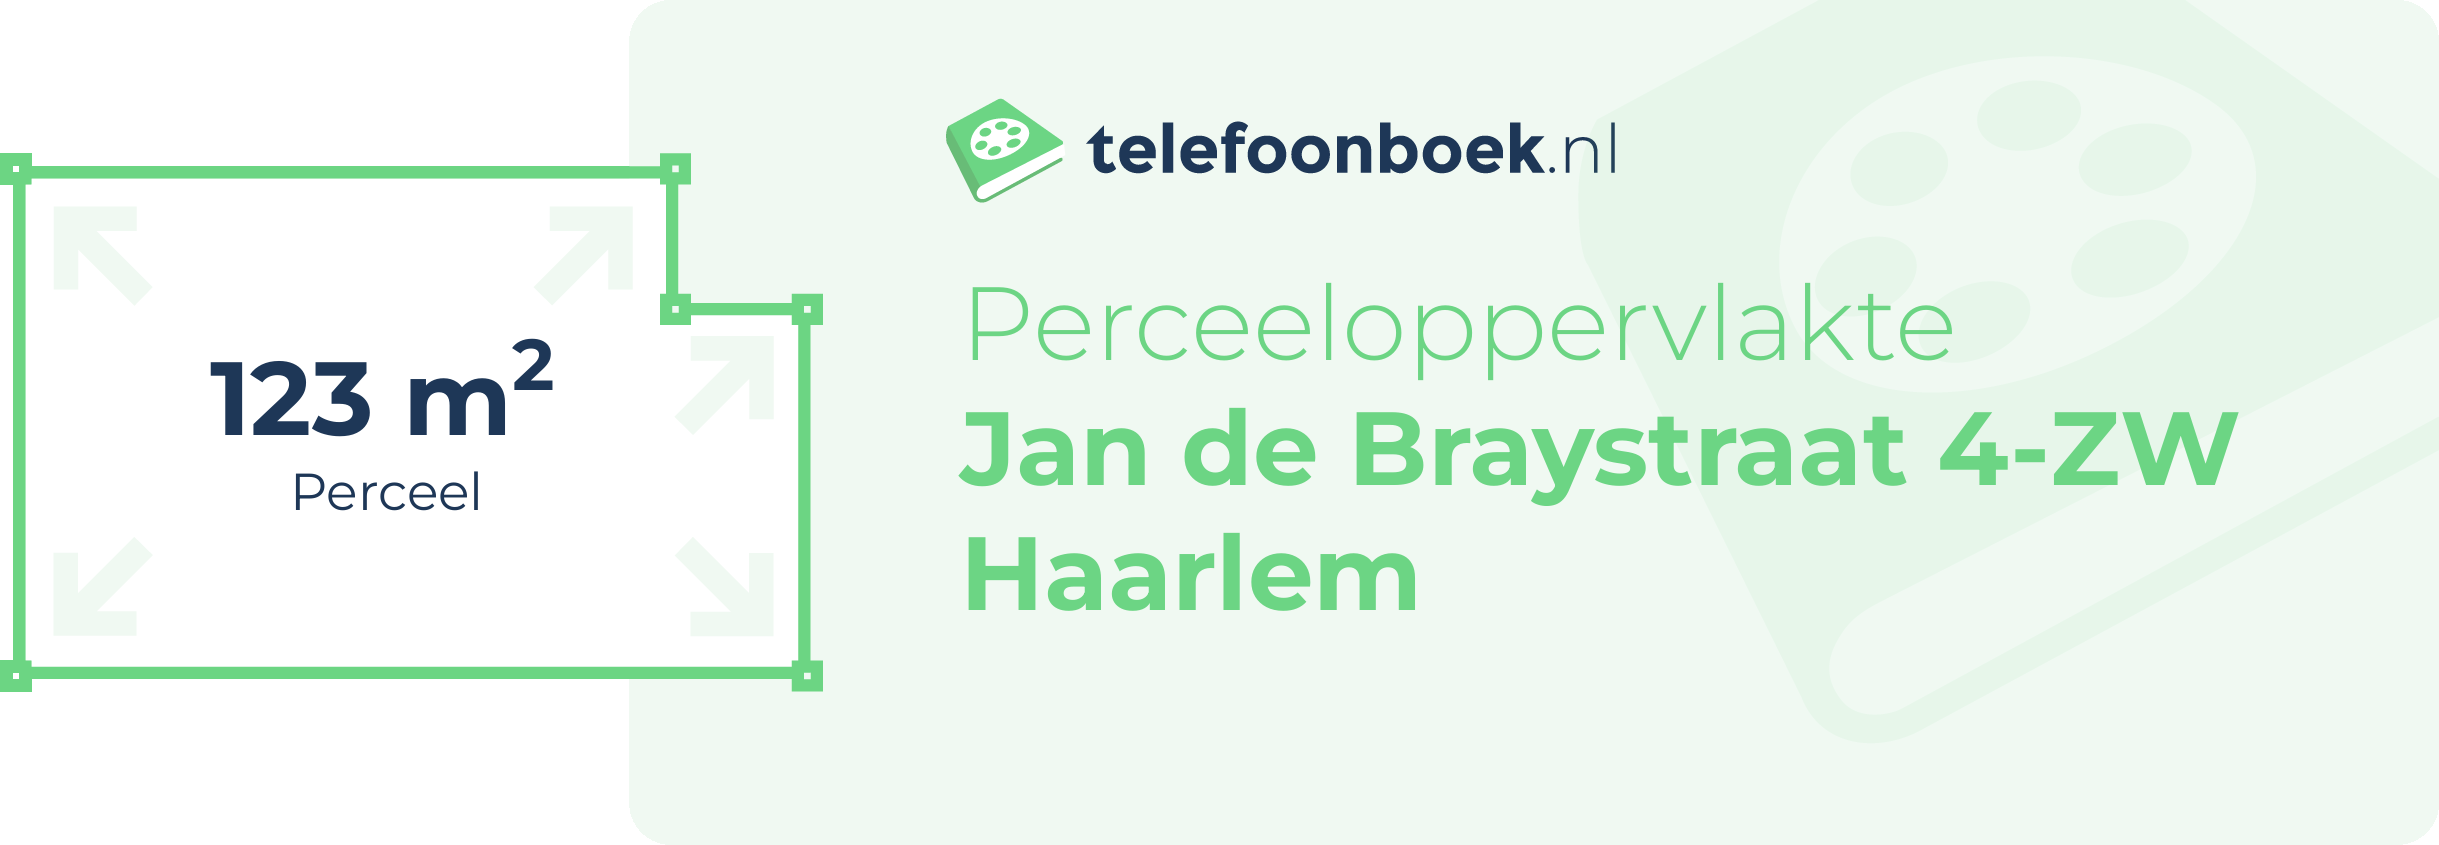 Perceeloppervlakte Jan De Braystraat 4-ZW Haarlem